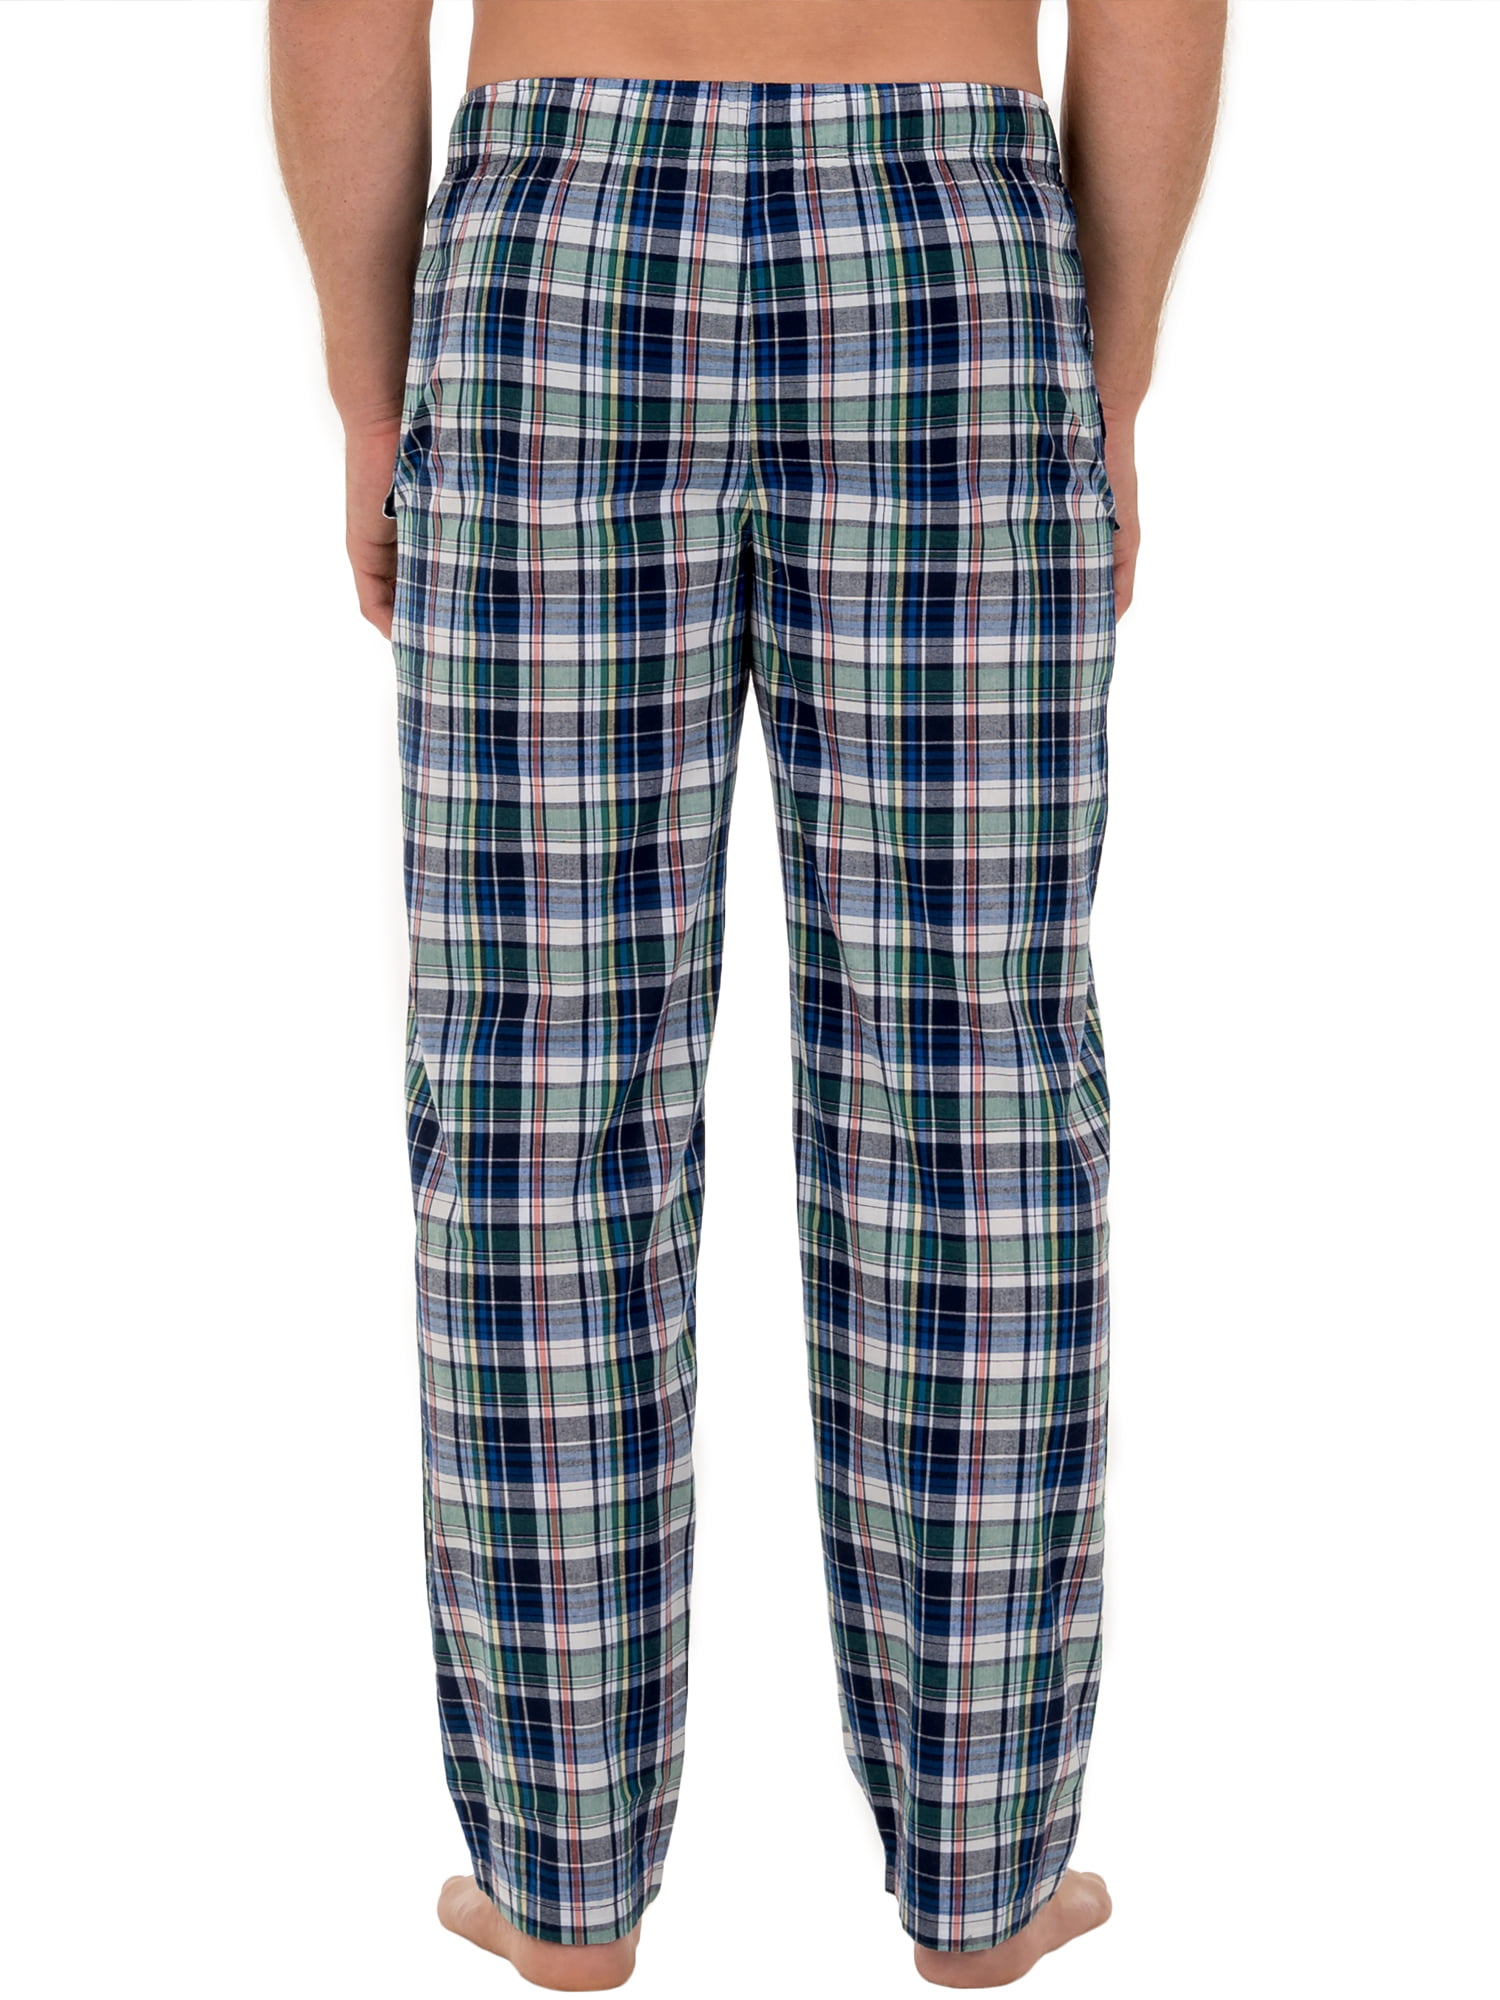 FRUIT OF THE LOOM Mens Woven Sleep Pajama Pant Bottom 